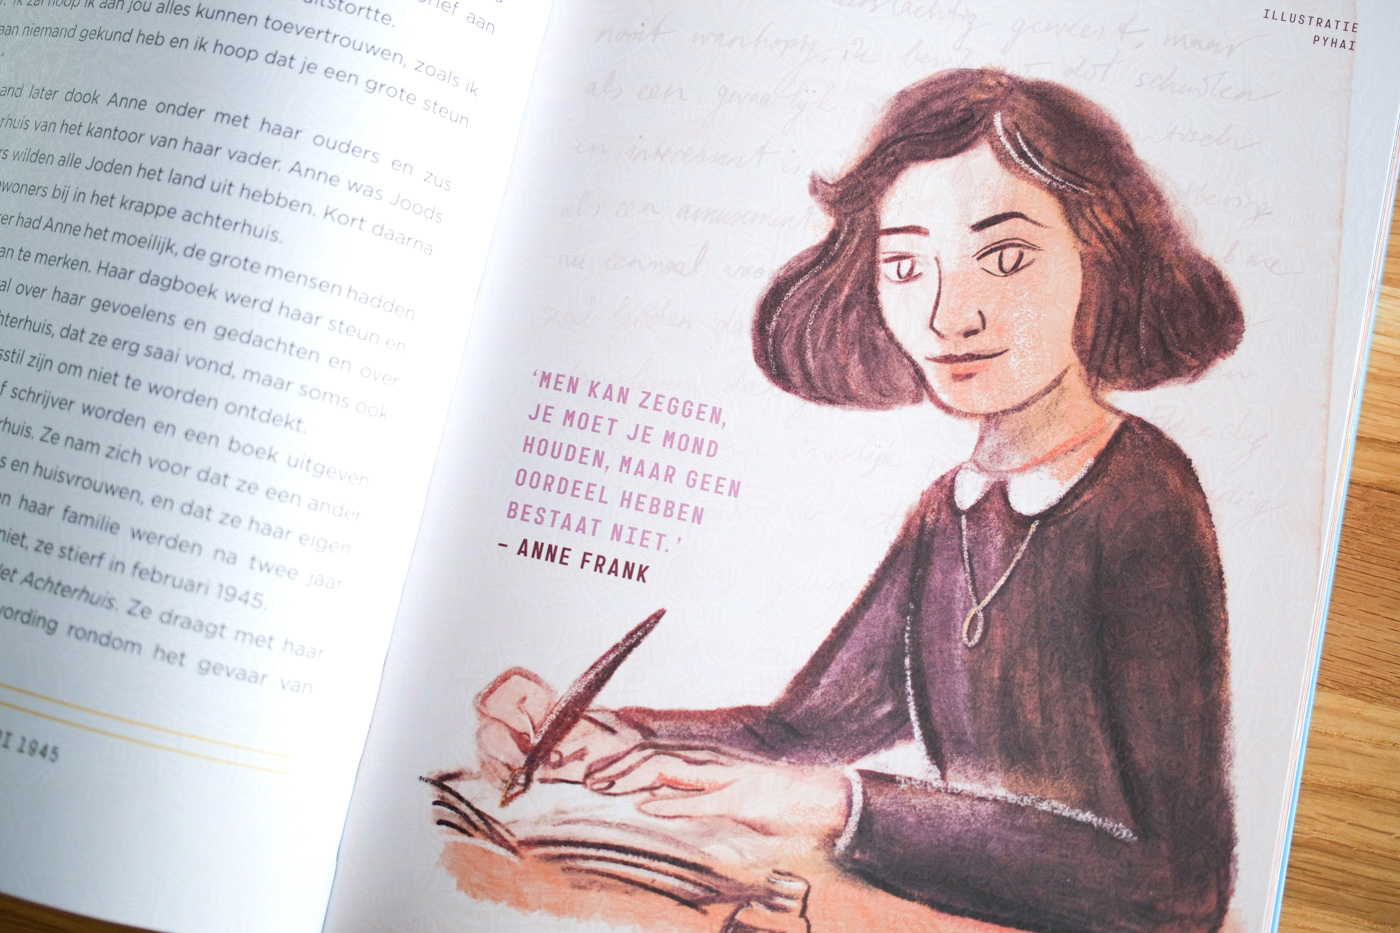 Illustration of Anne Frank, made by Pyhai for Bedtijdverhalen voor Rebelse Meisjes, the Dutch edition of Goodnight Stories for Rebel Girls.